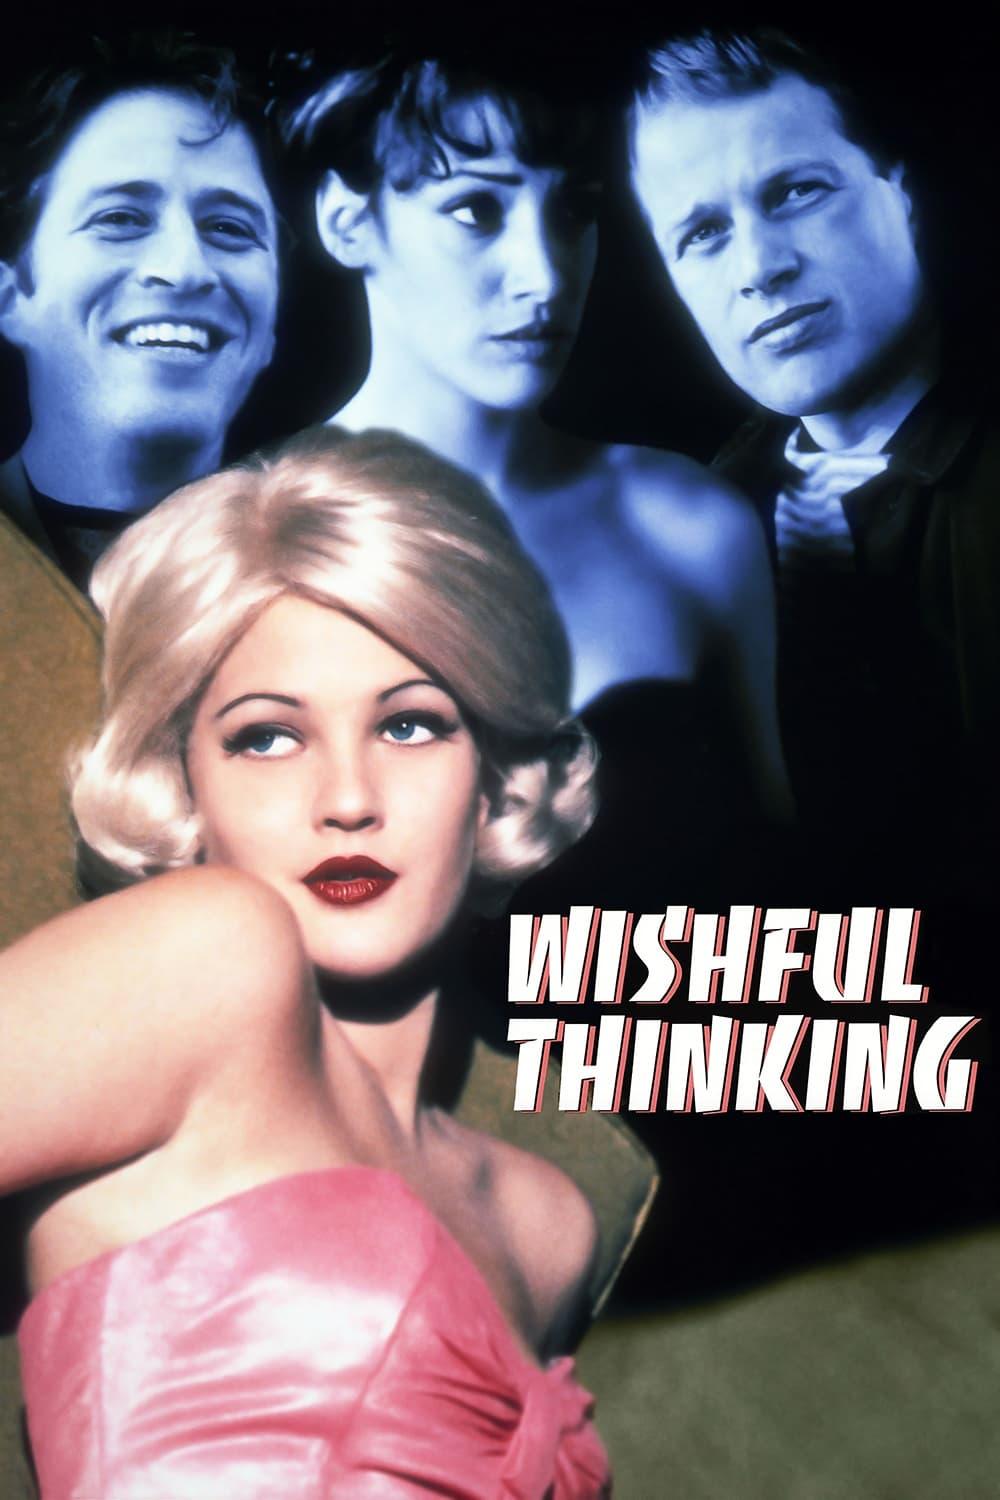 Wishful Thinking poster